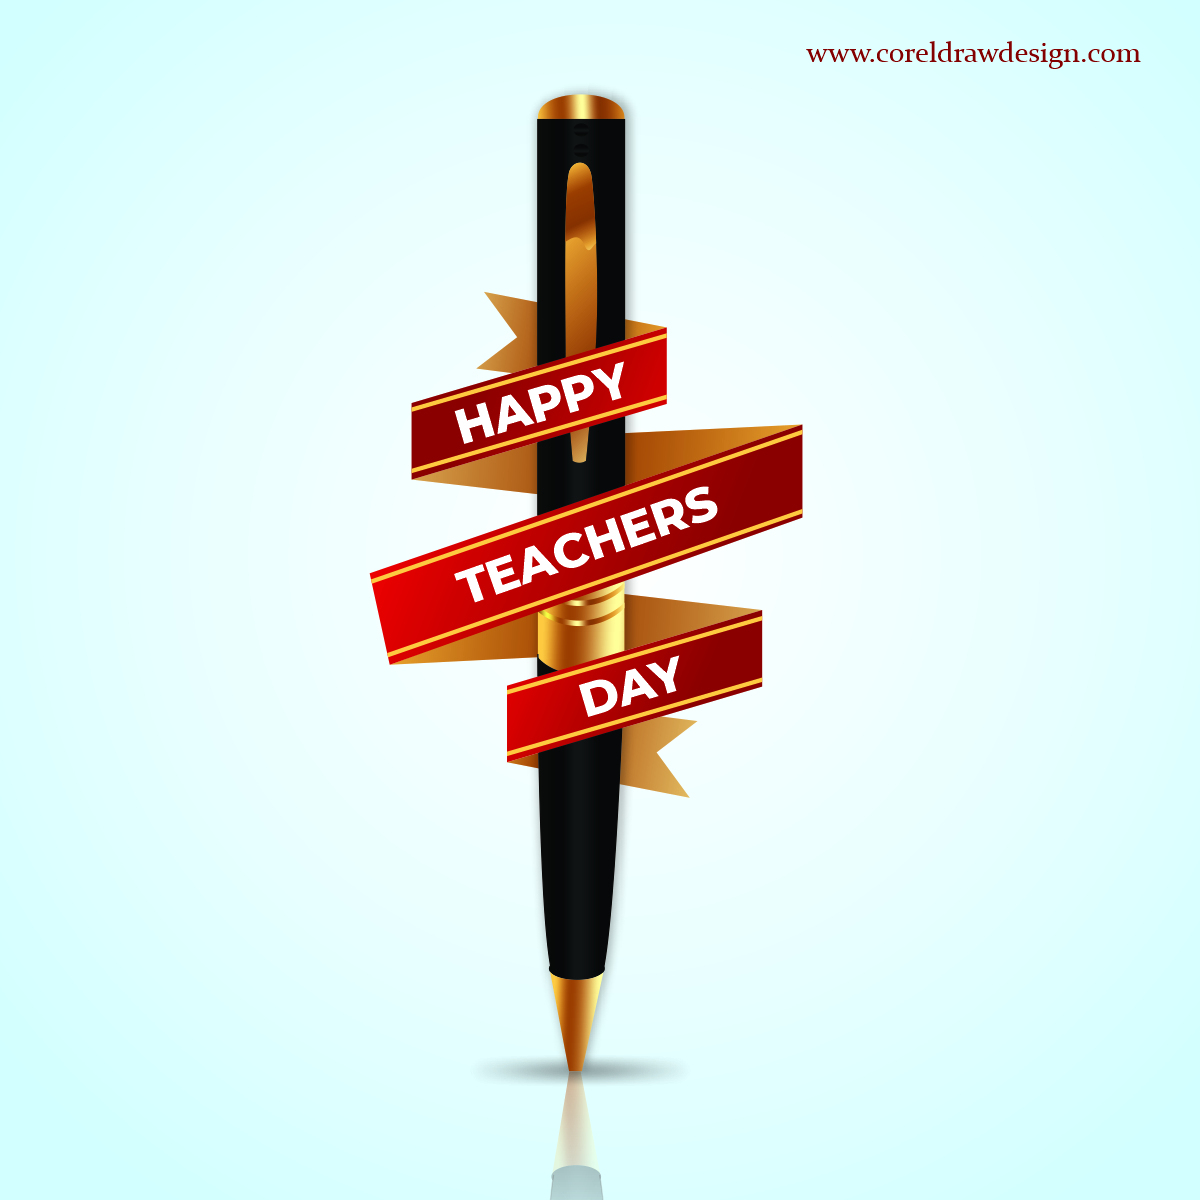 Happy Teachers Day Pen Lettering Design